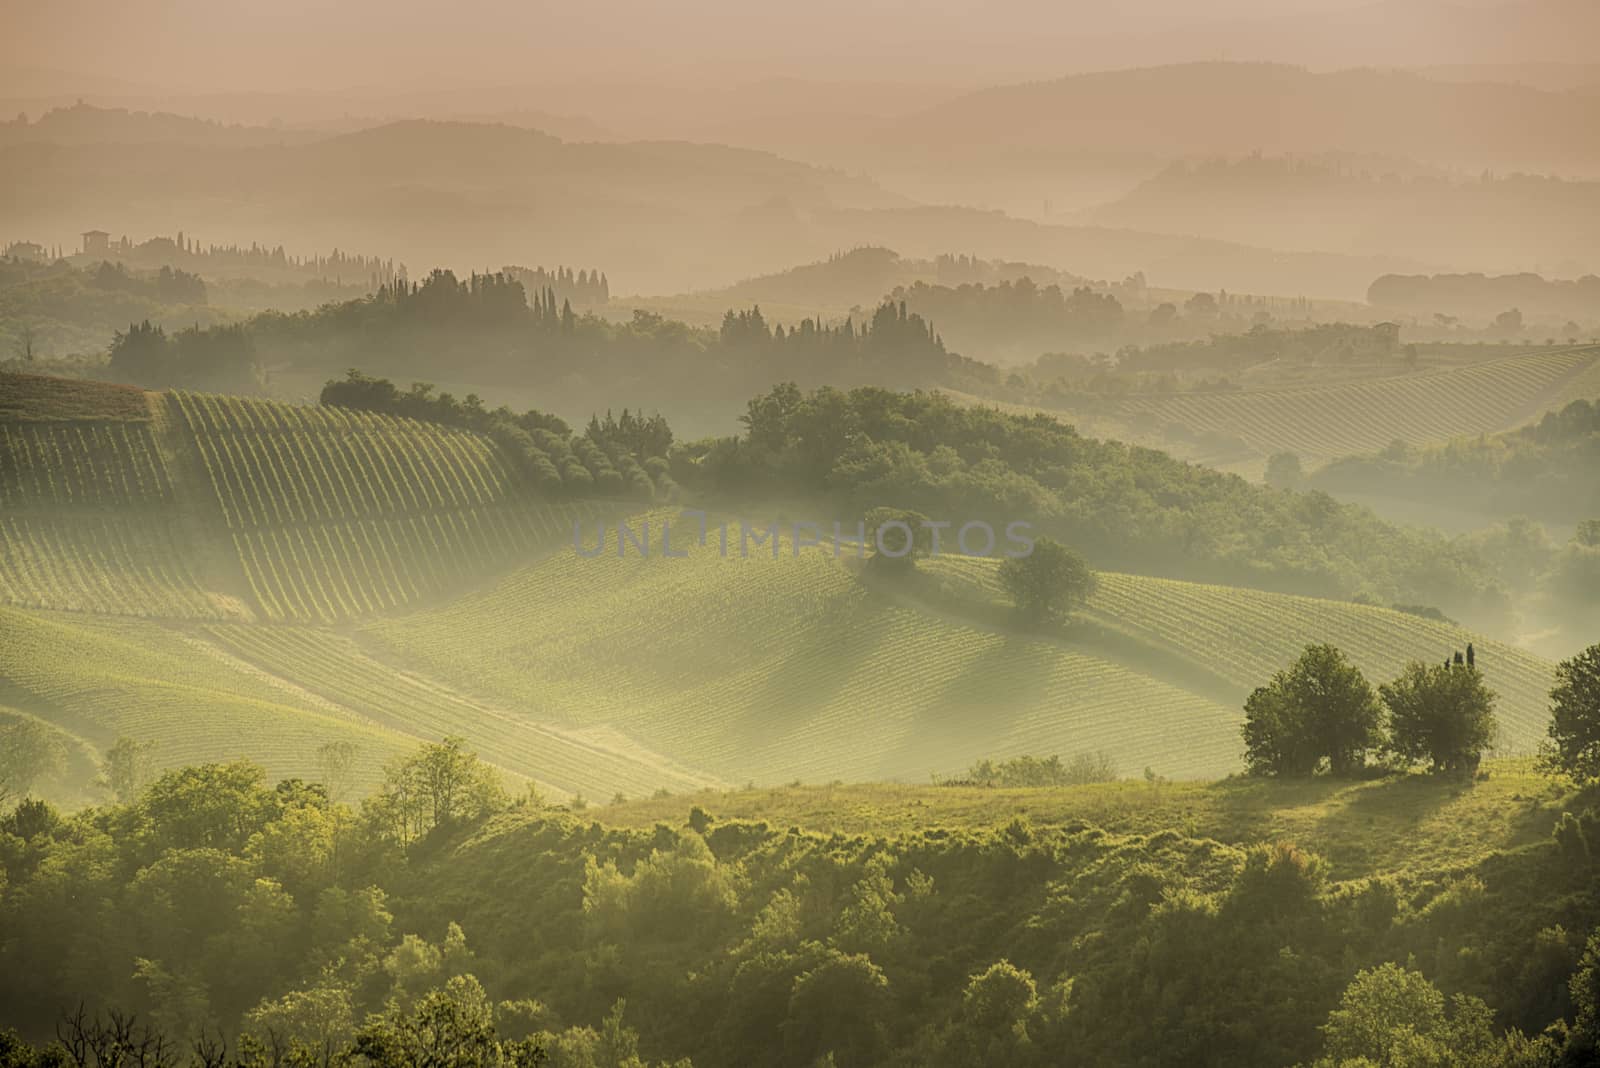 A brautiful misty sun rise over the tuscan hills around San Gimignano